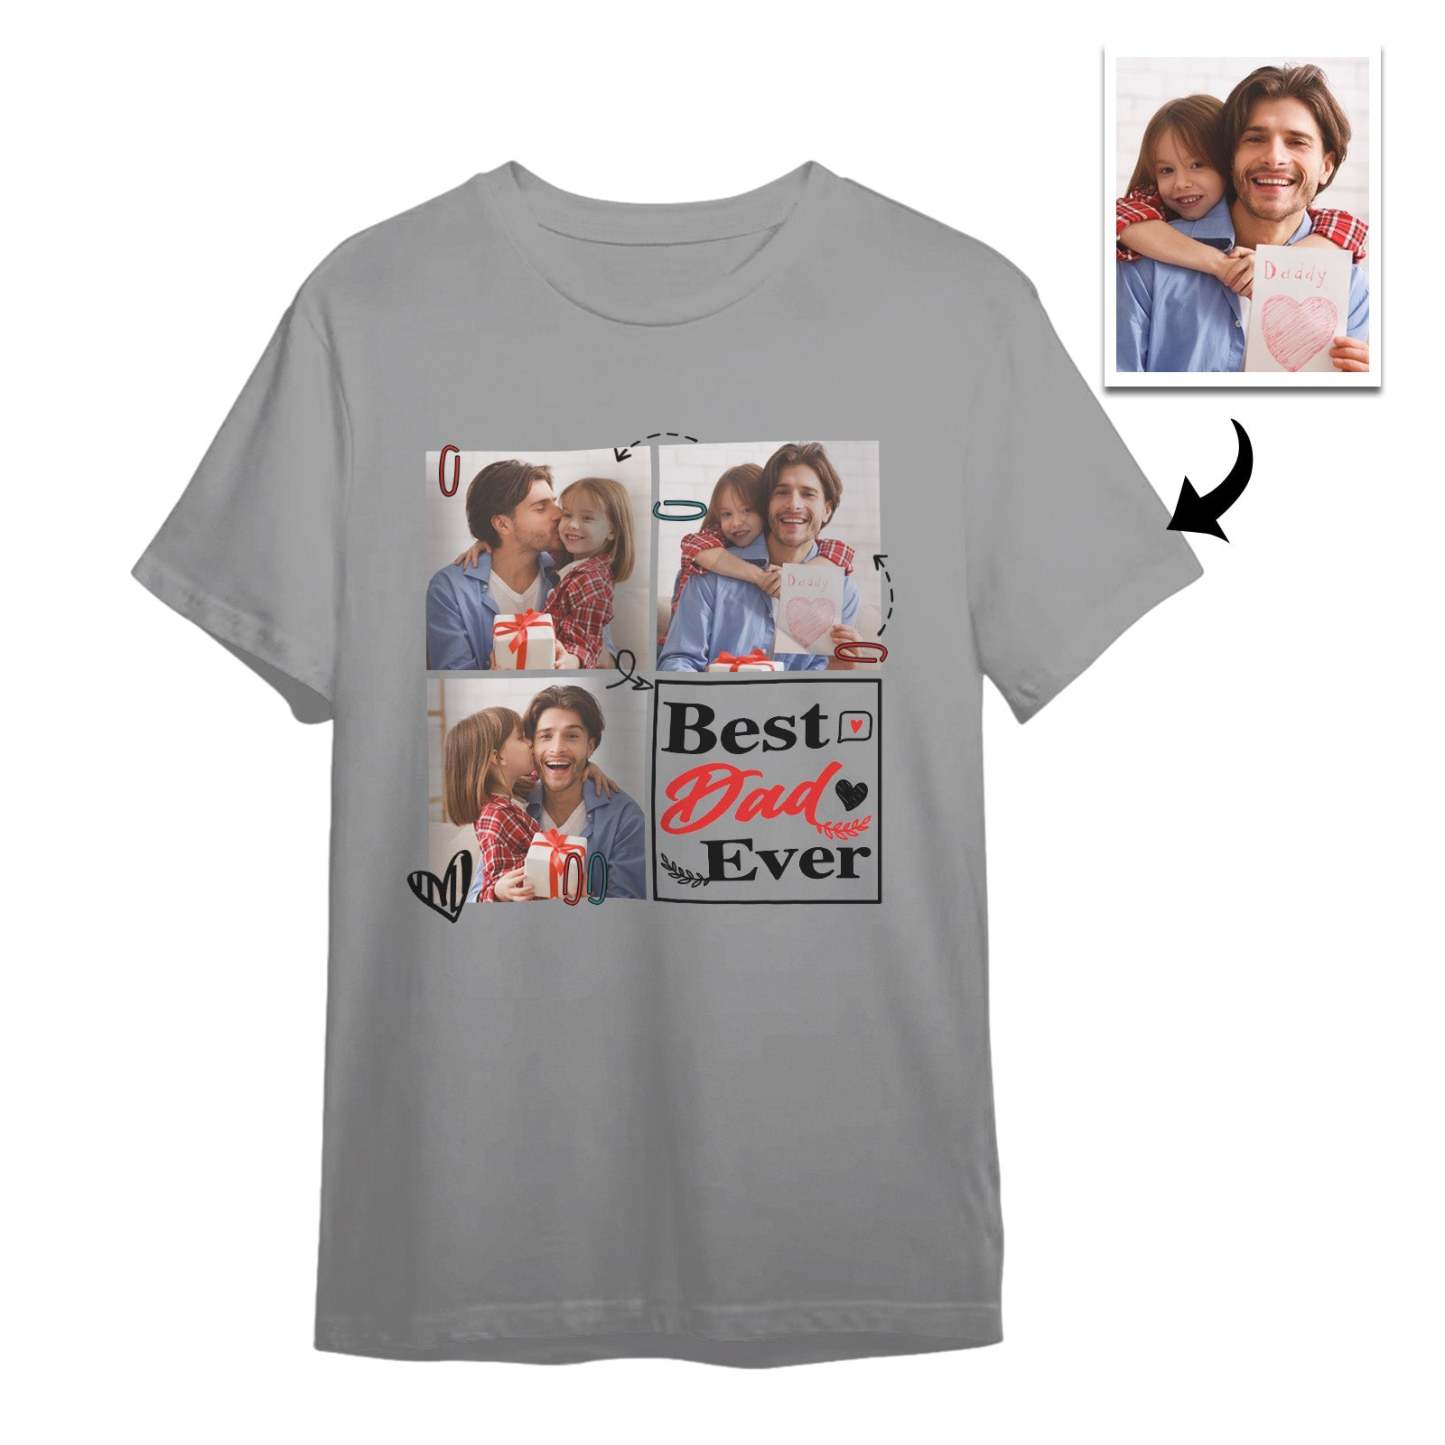 Benutzerdefiniertes 3-fotos-t-shirt, Personalisiertes Foto-herren-t-shirt, Bester Vater Aller Zeiten, Vatertagsgeschenk, Familien-t-shirt - FotoSocken